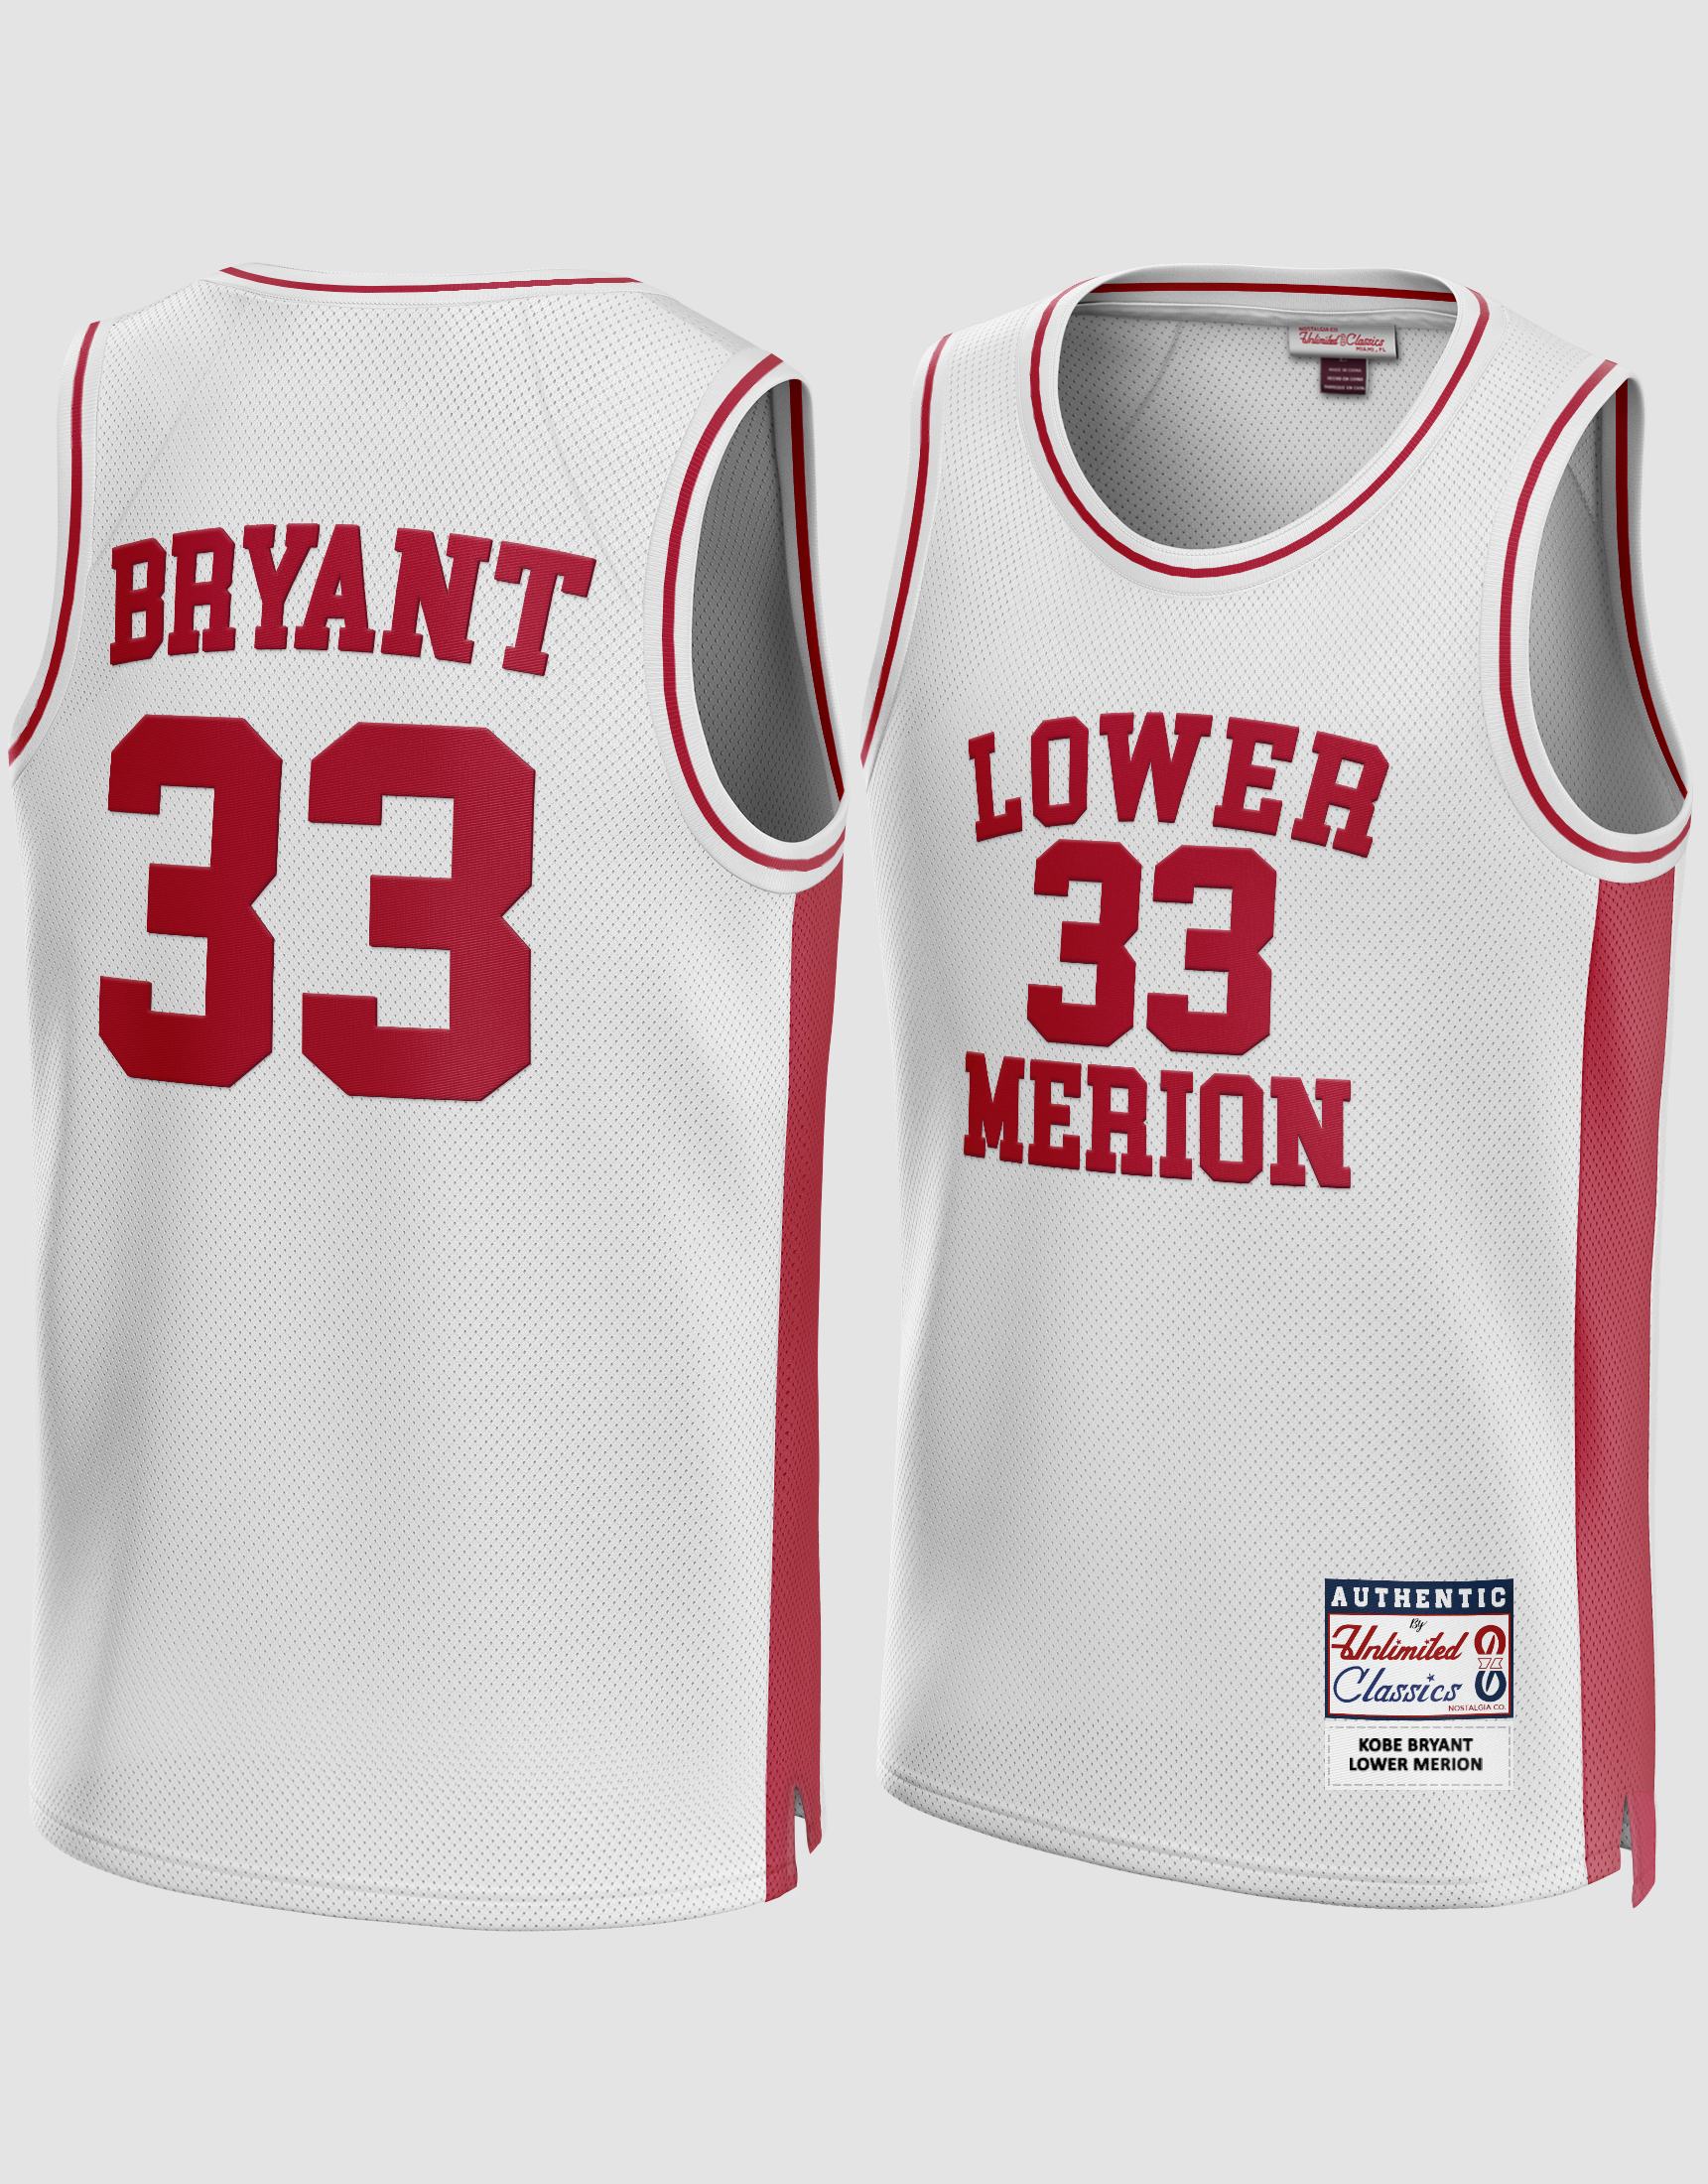 Youth Kobe Bryant #33 Lower Merion Basketball Jersey XL